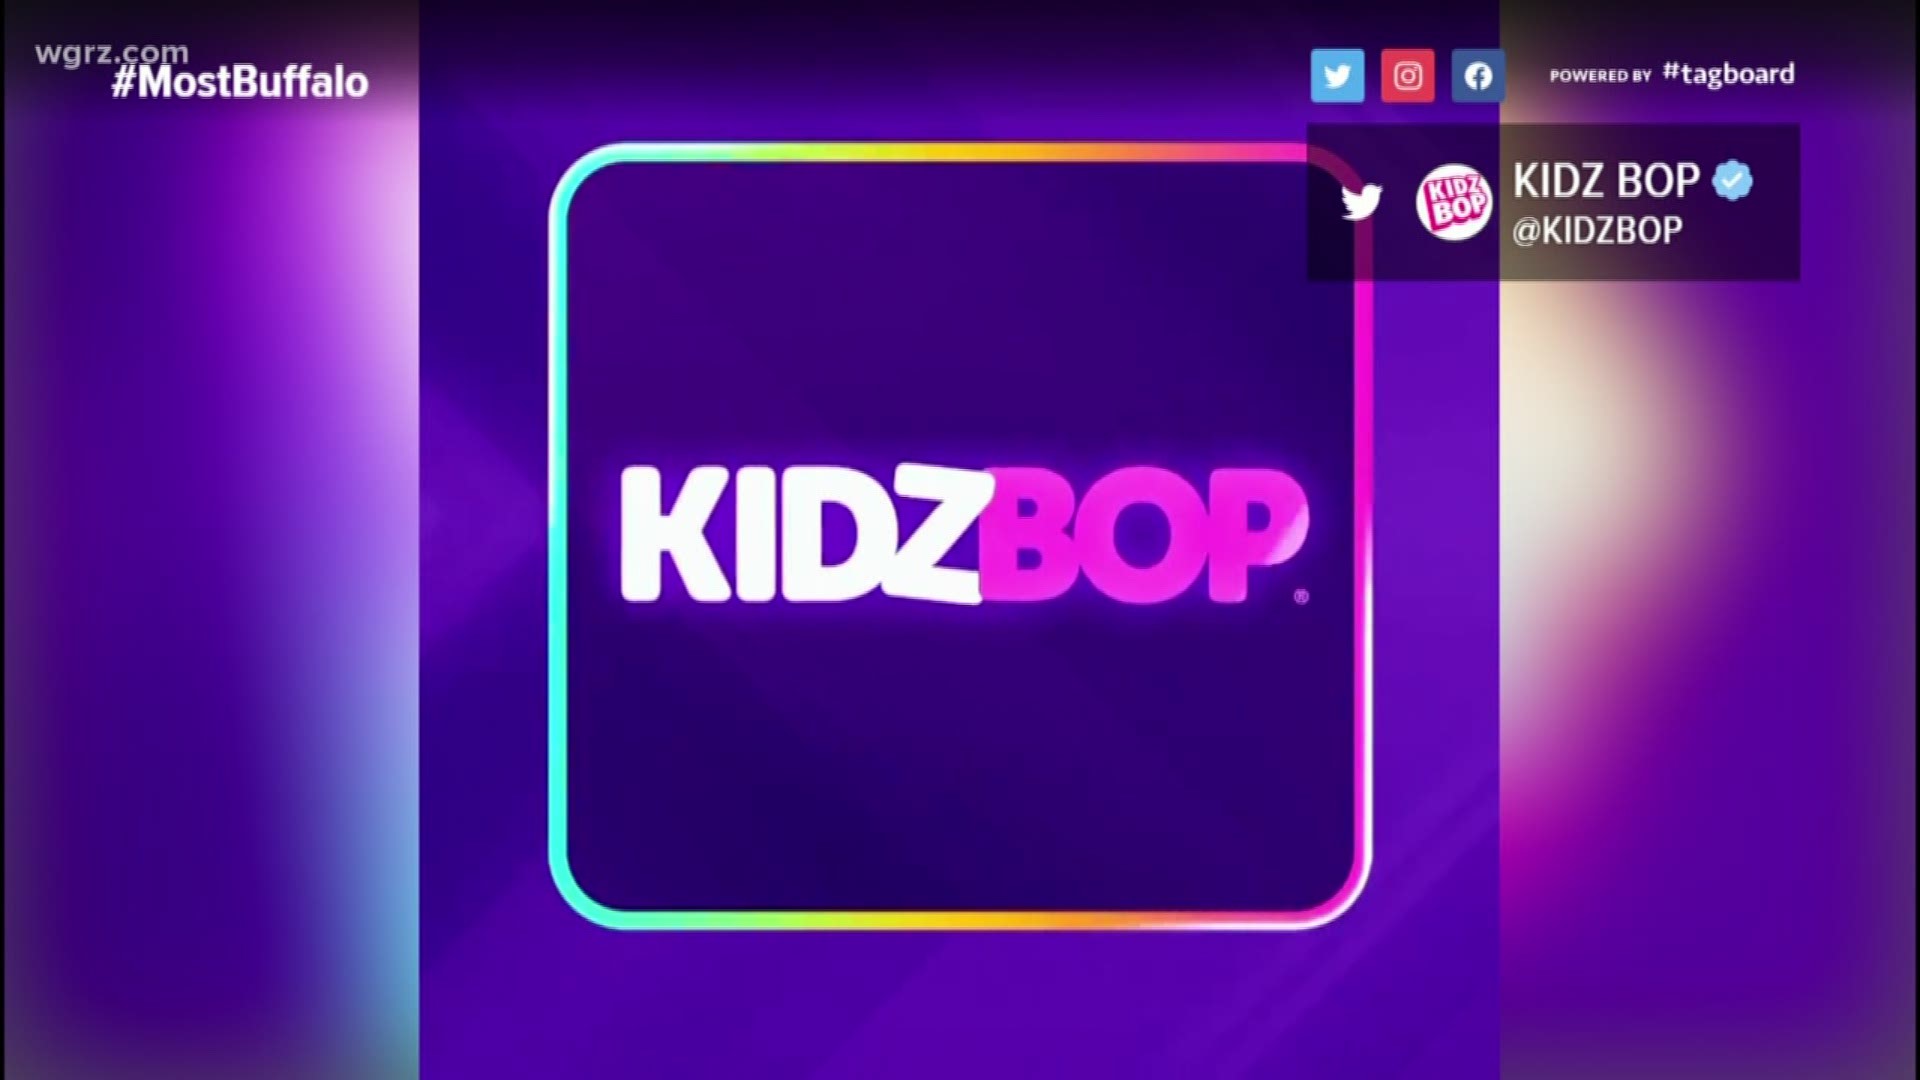 Kidzbop Live 2020 coming to WNY June 28th